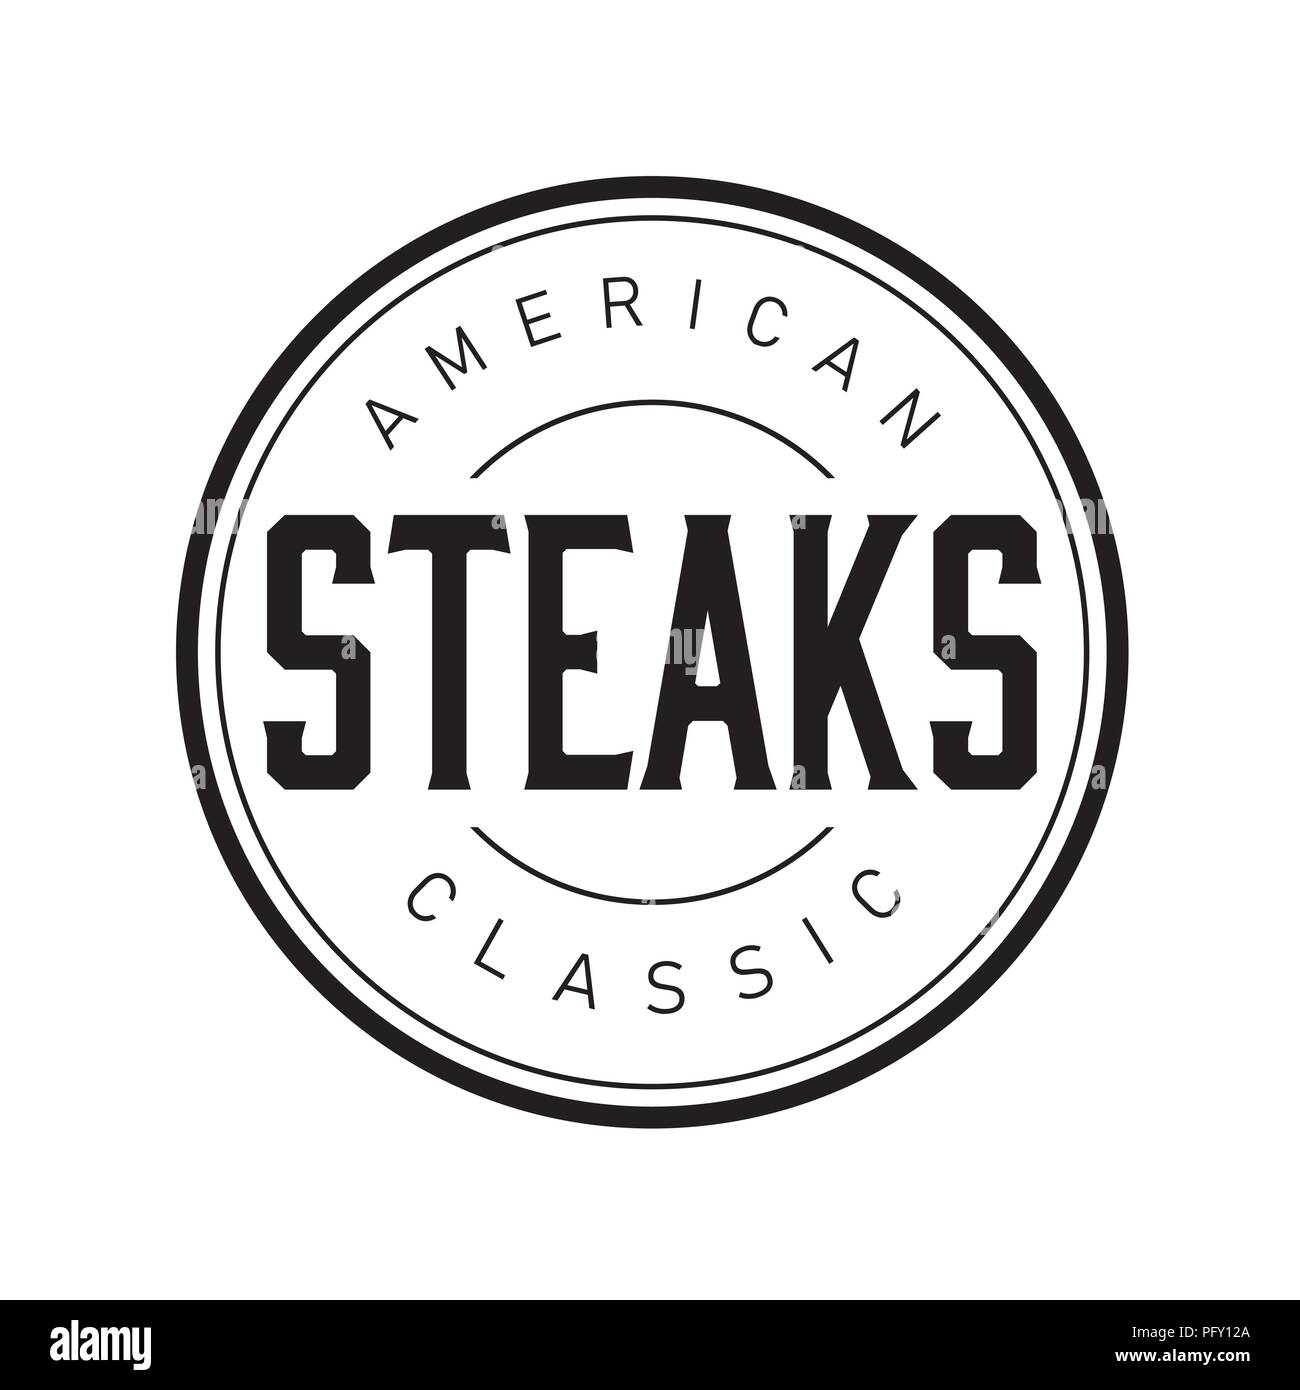 American Classic Steaks vintage Stempel Stock Vektor